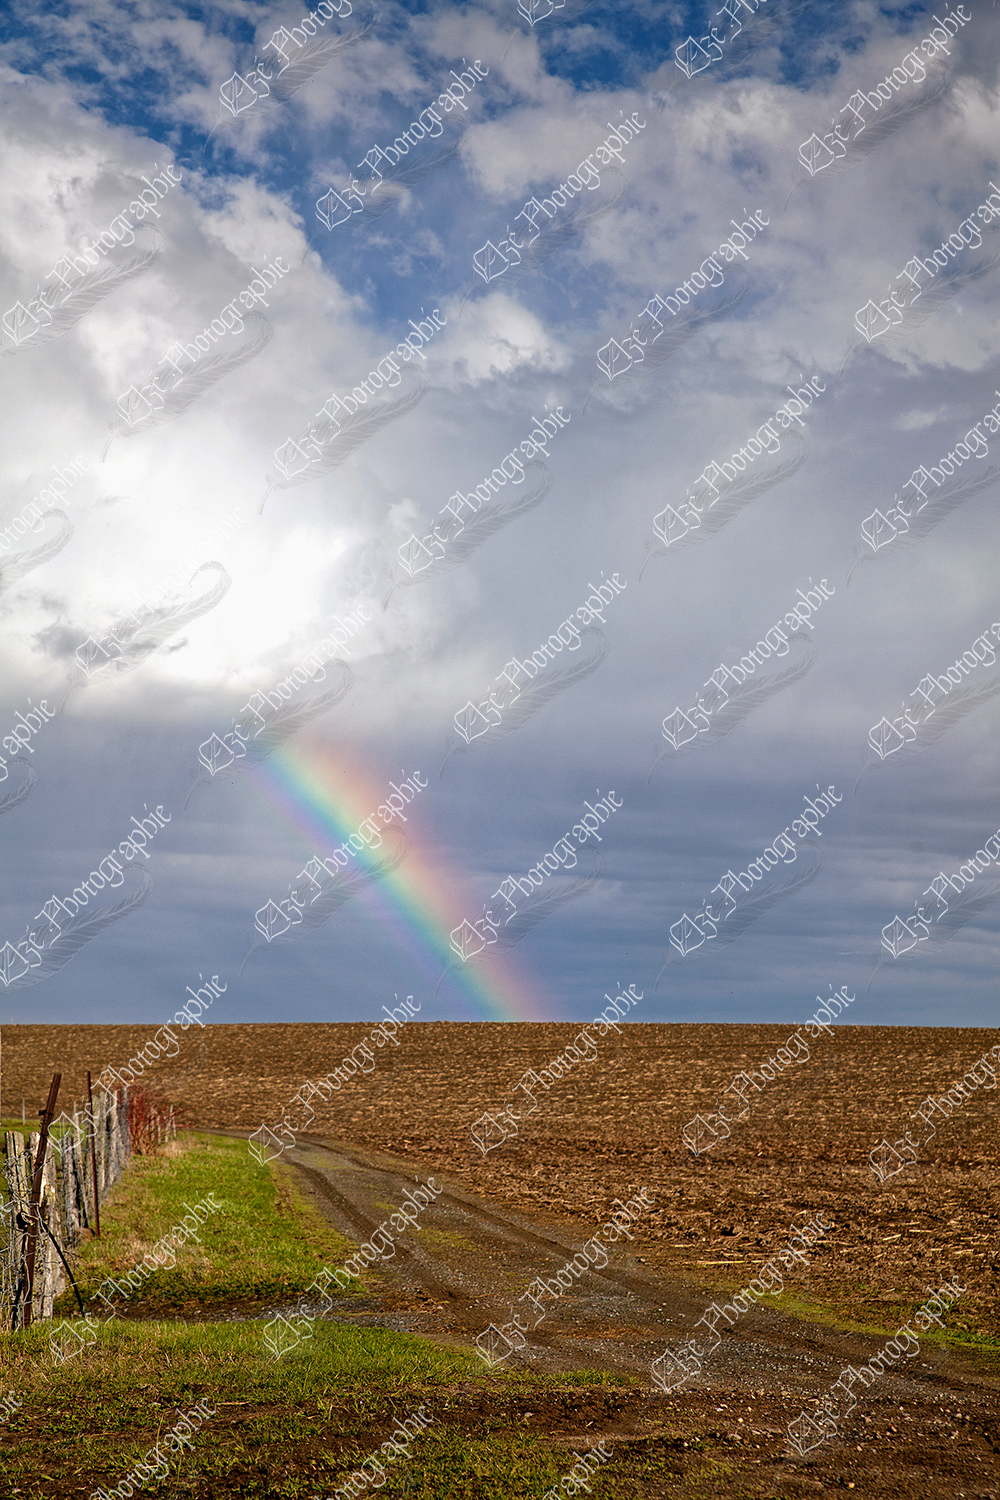 elze_photo_8637_champ_terre_agricole_rainbow_fall